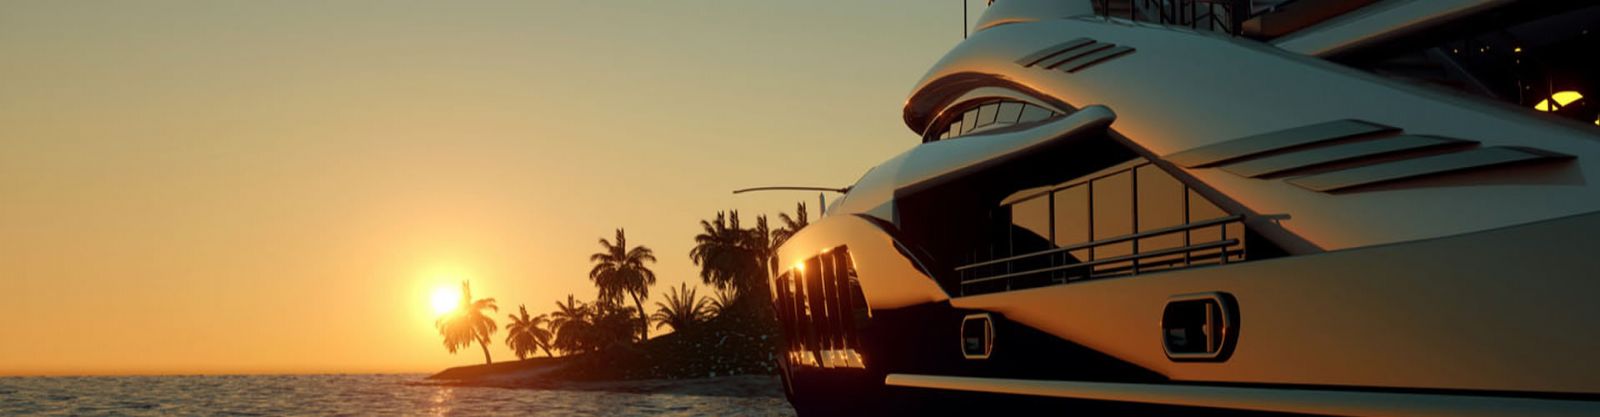 Yacht Rental  Cruise Dinner Show